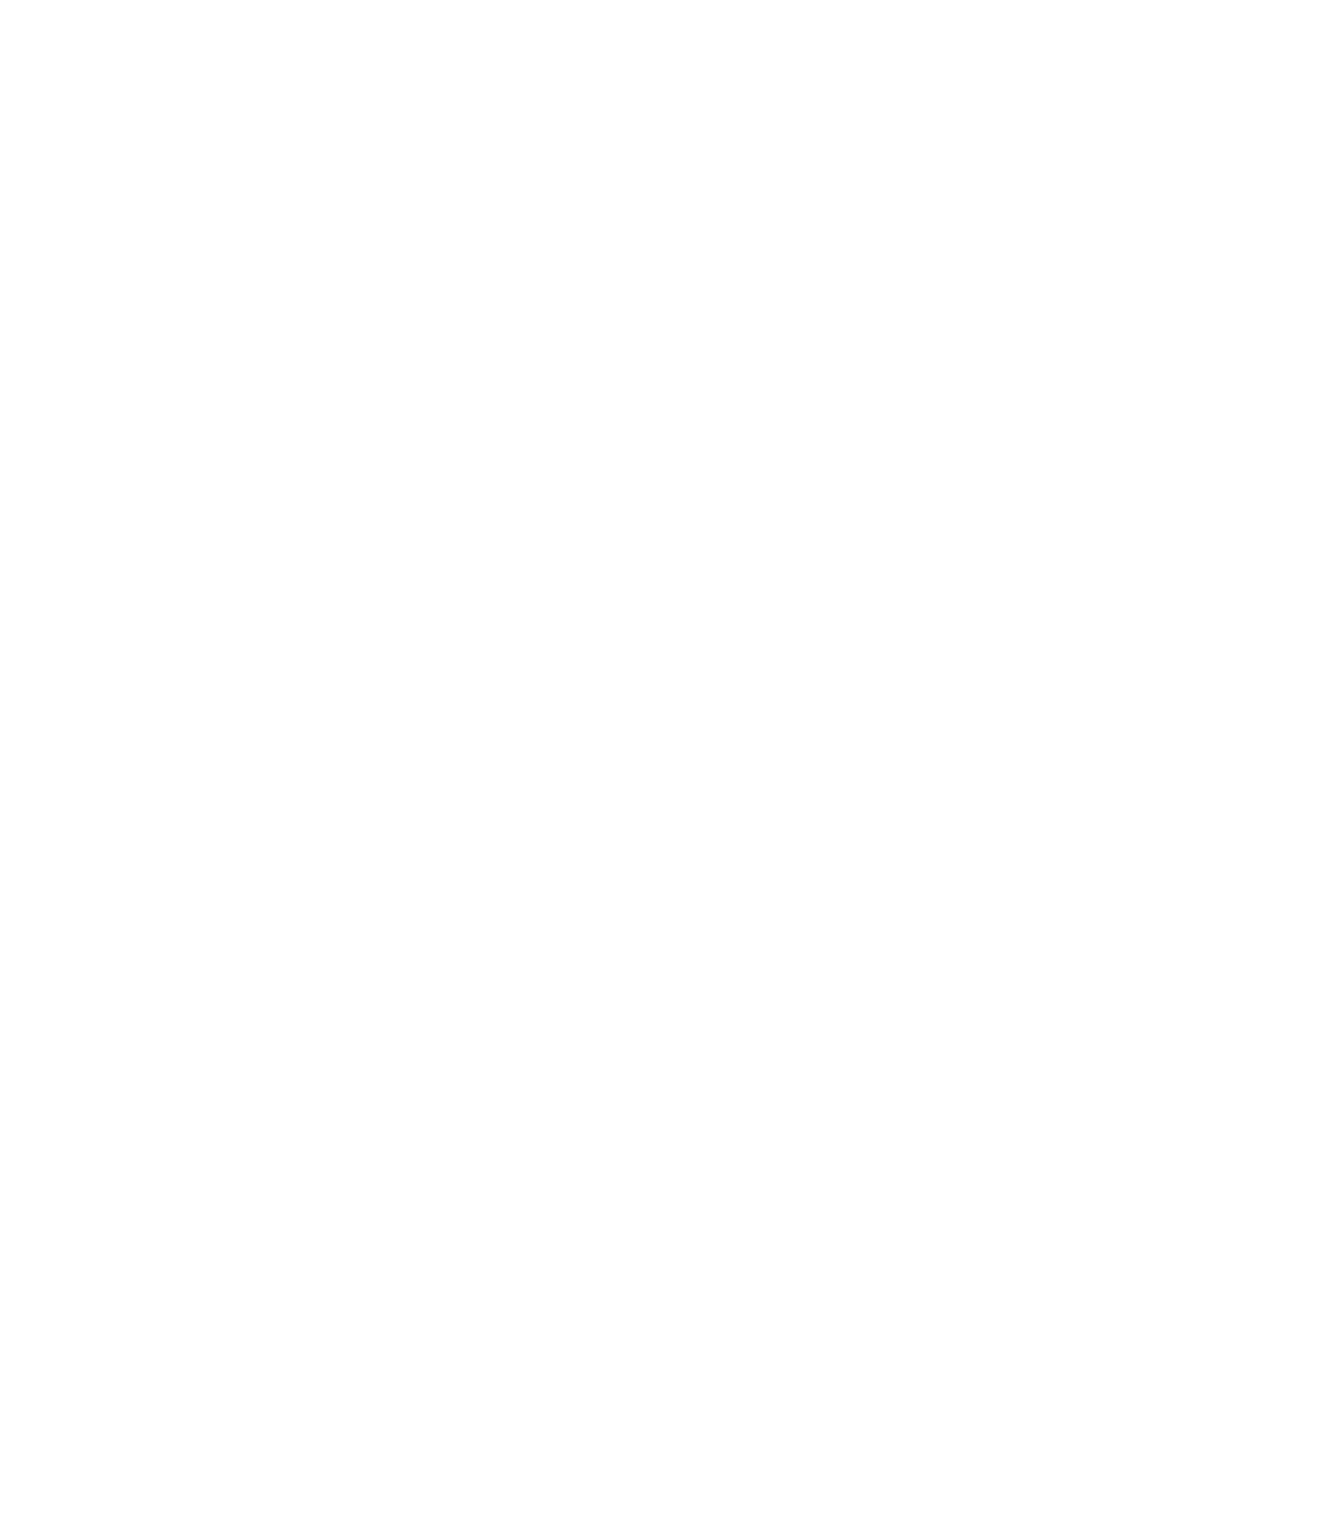 American Century ETF Trust logo for dark backgrounds (transparent PNG)